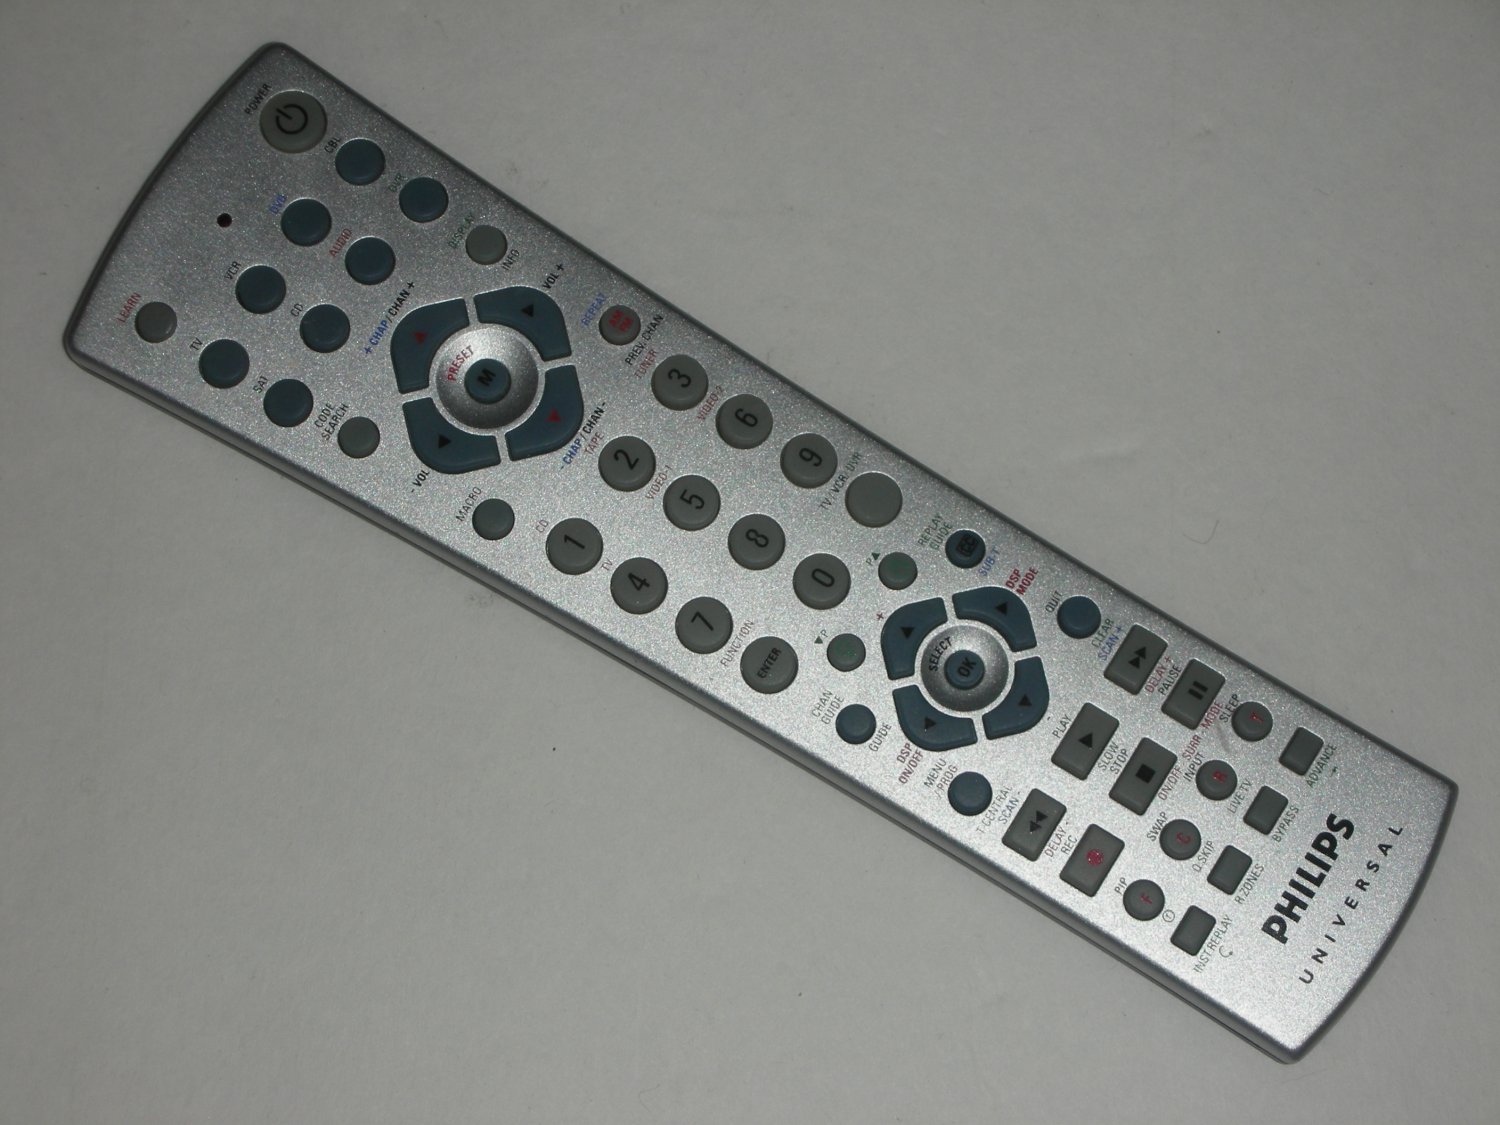 Philips PMDVR8 TV DVD VCR CBL SAT CD Audio DVR 8-Device Universal Programmable Remote Control